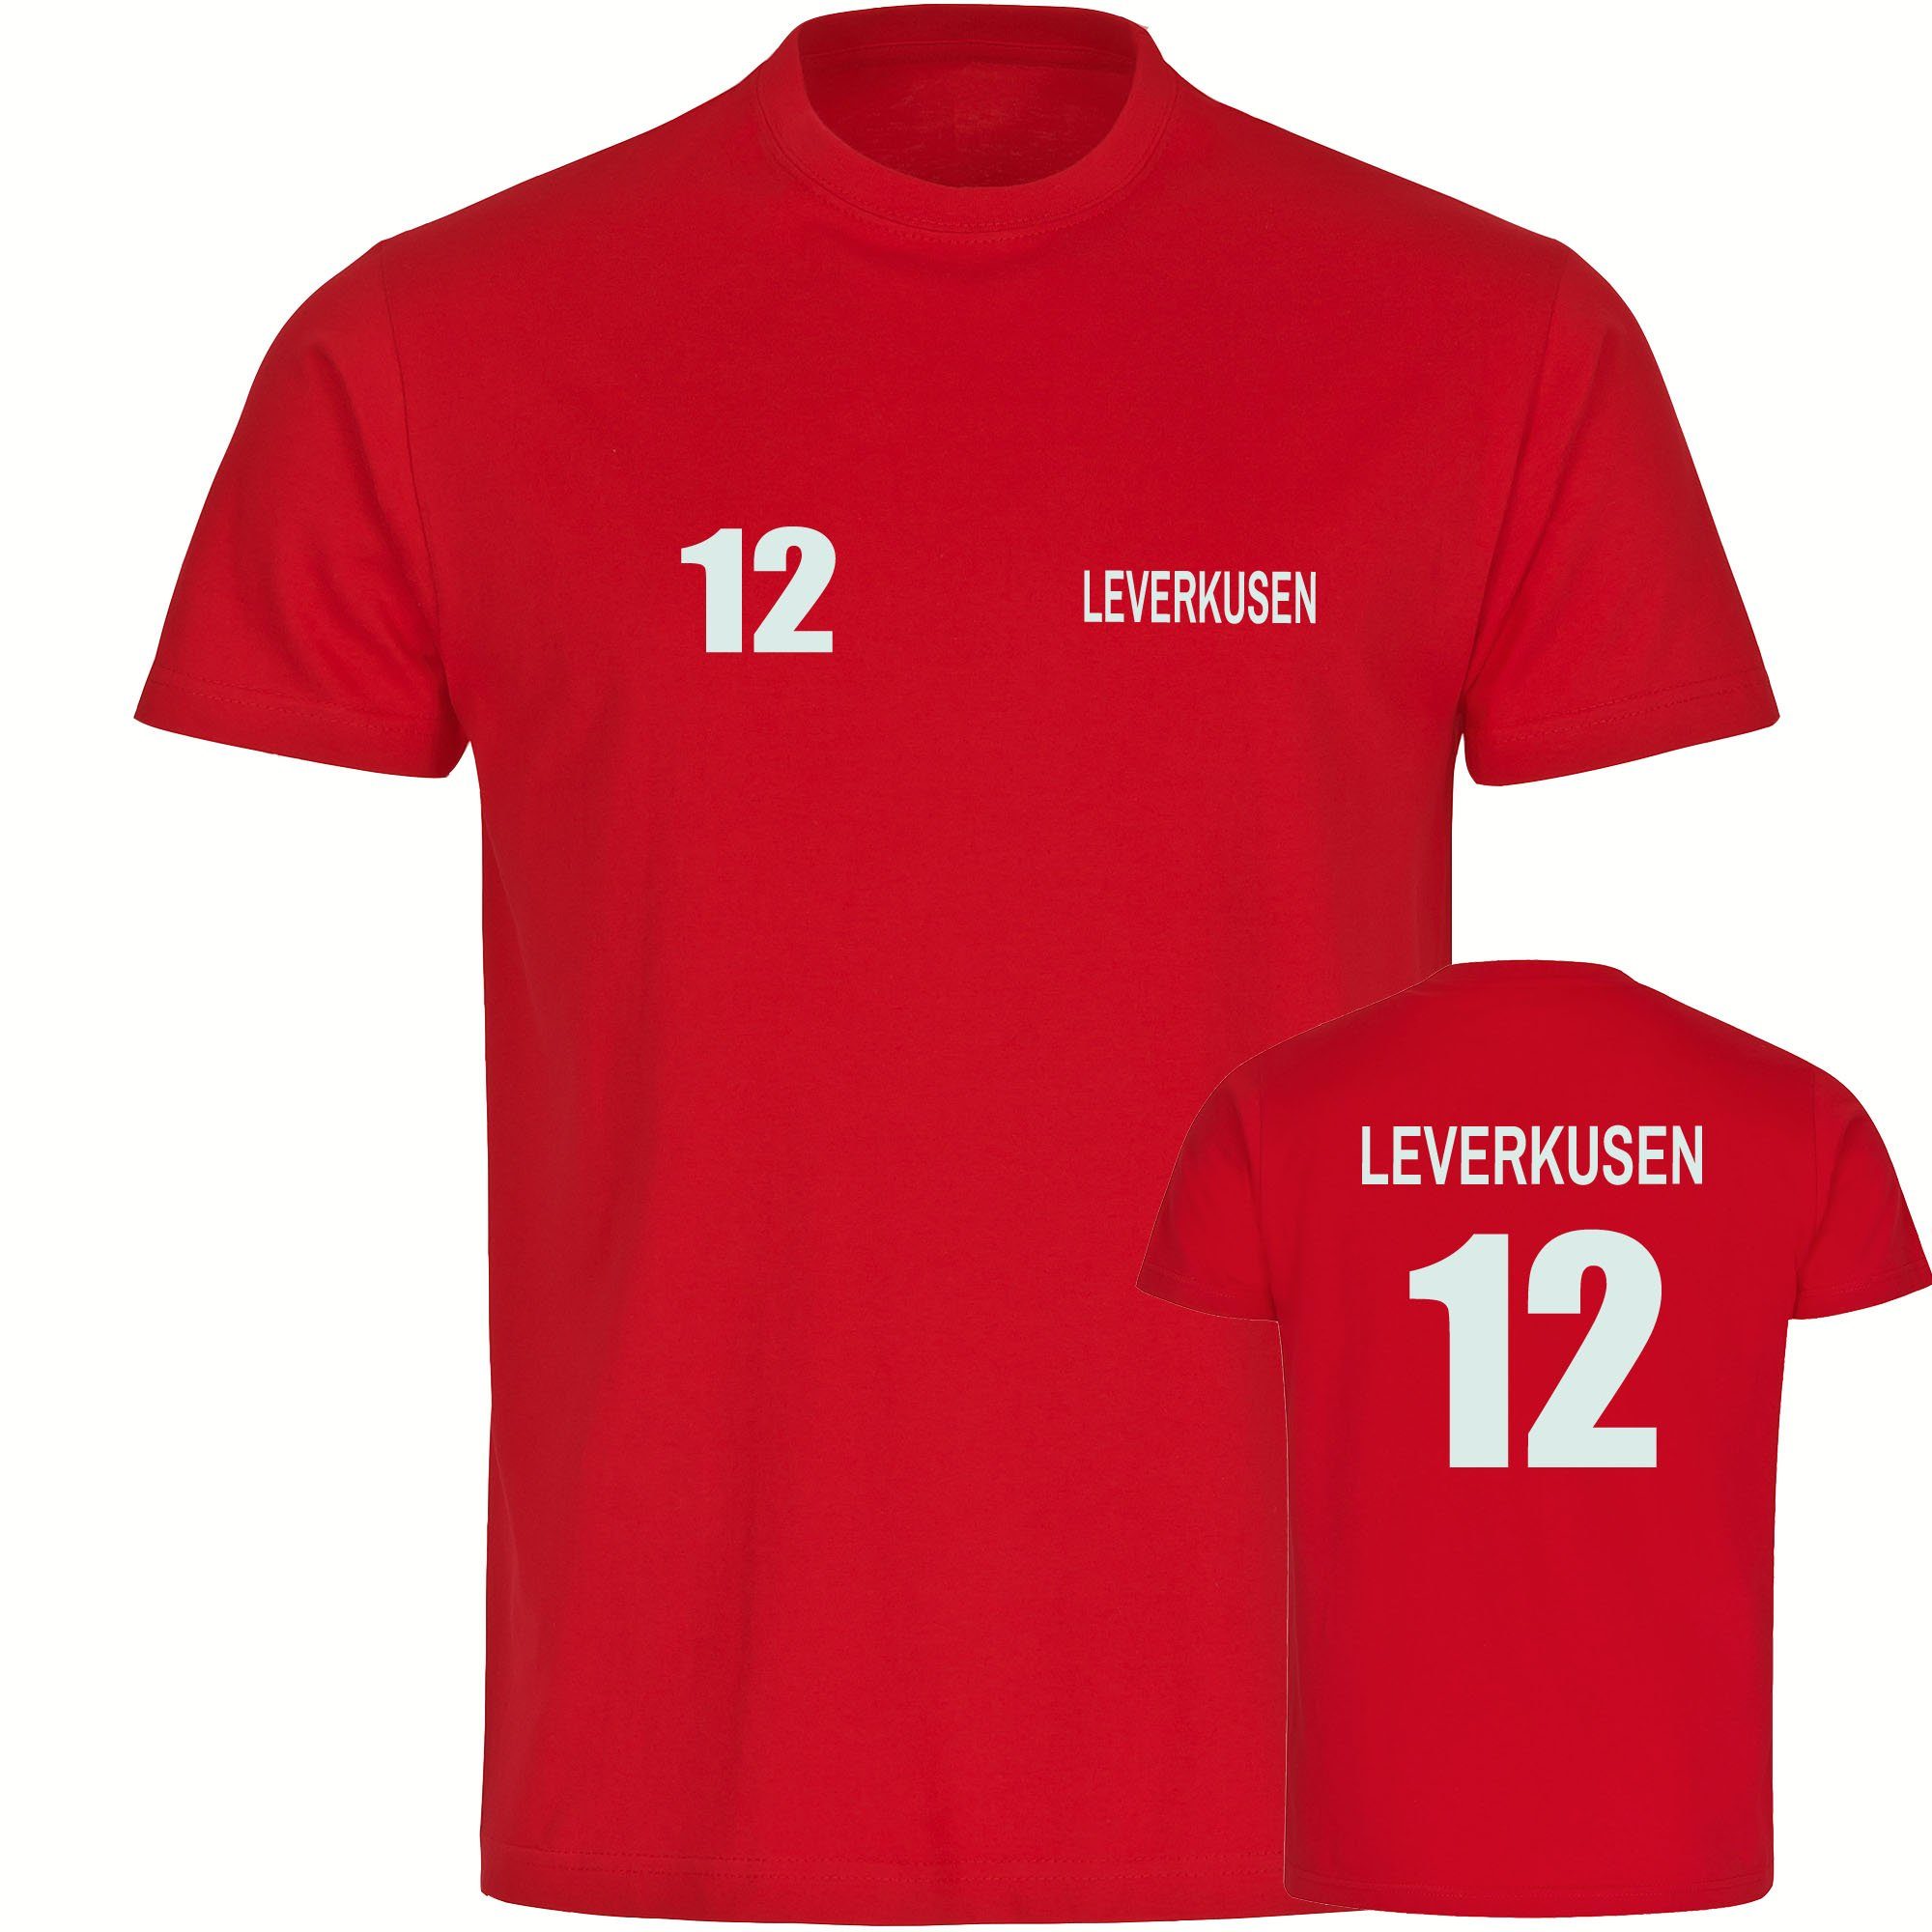 multifanshop T-Shirt Herren Leverkusen - Trikot 12 - Männer